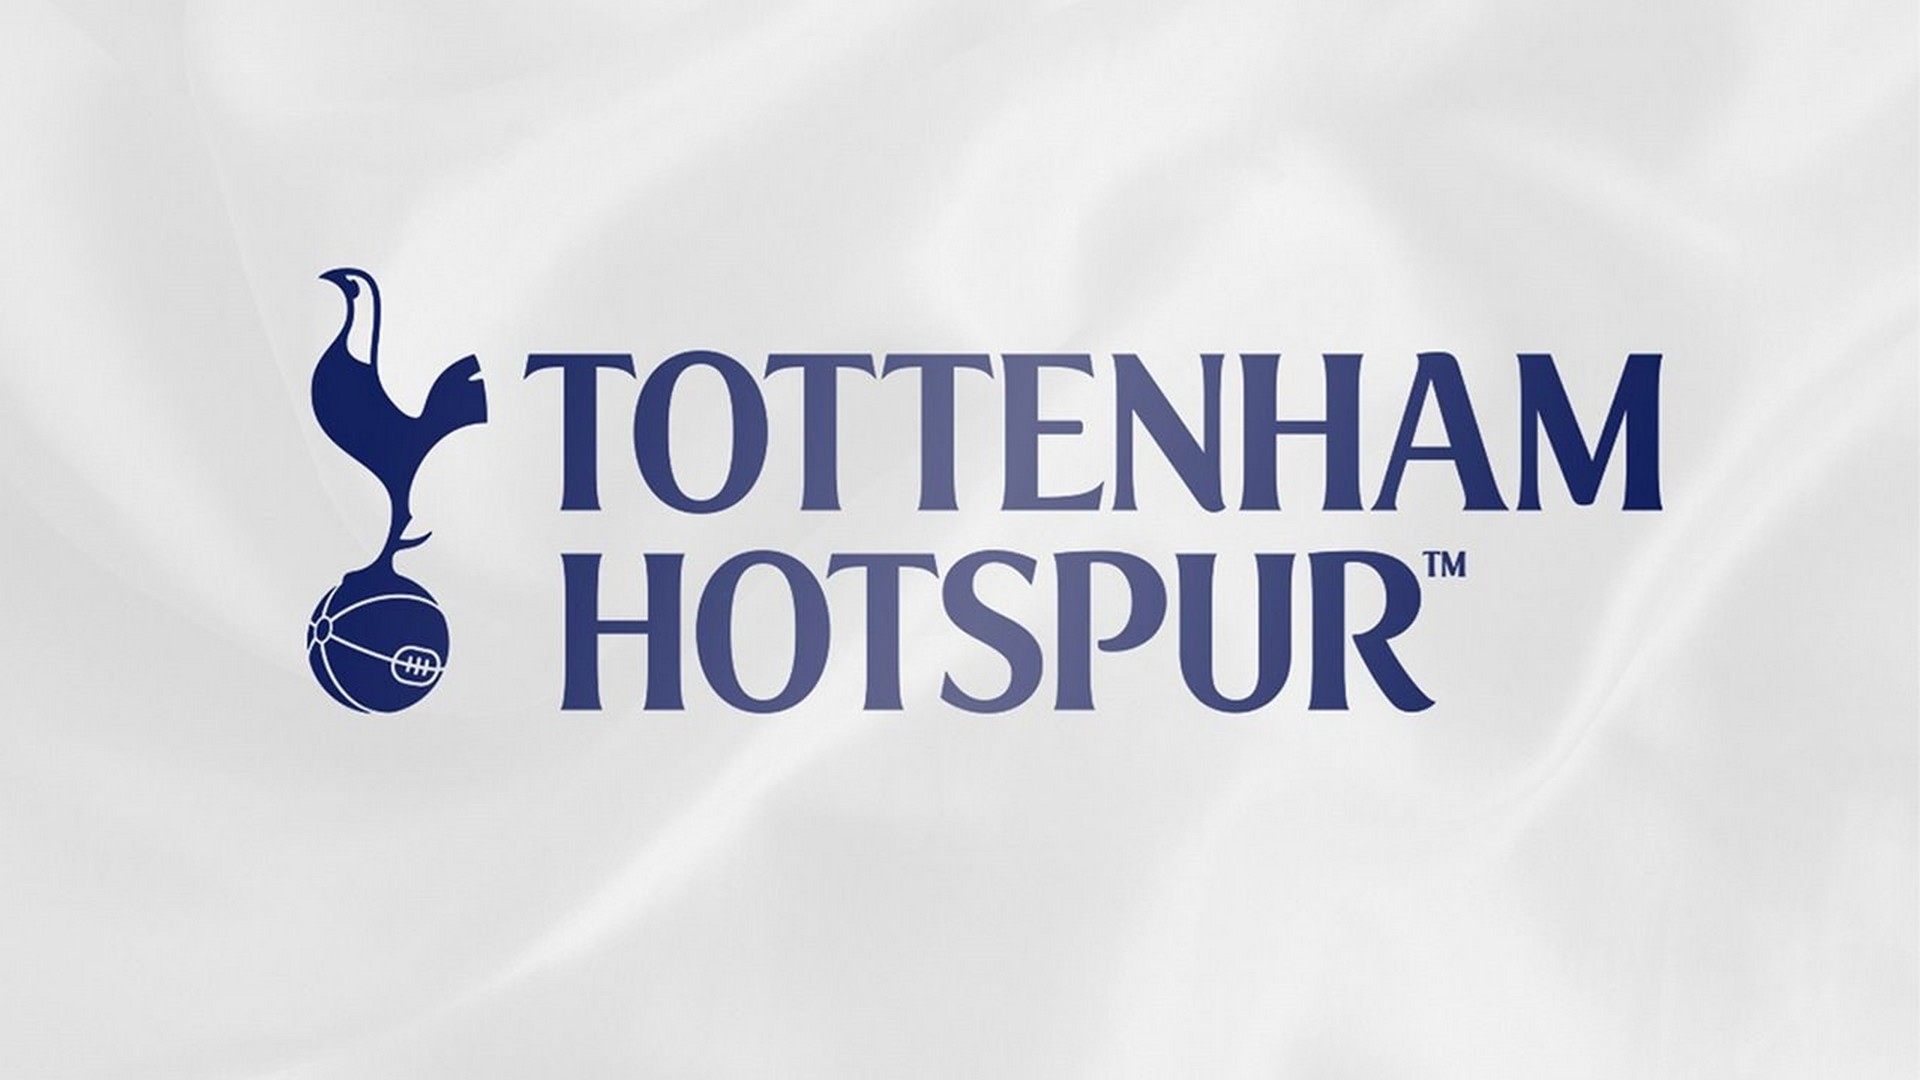 Hd Desktop Wallpaper Tottenham Hotspur 2019 Football Wallpaper